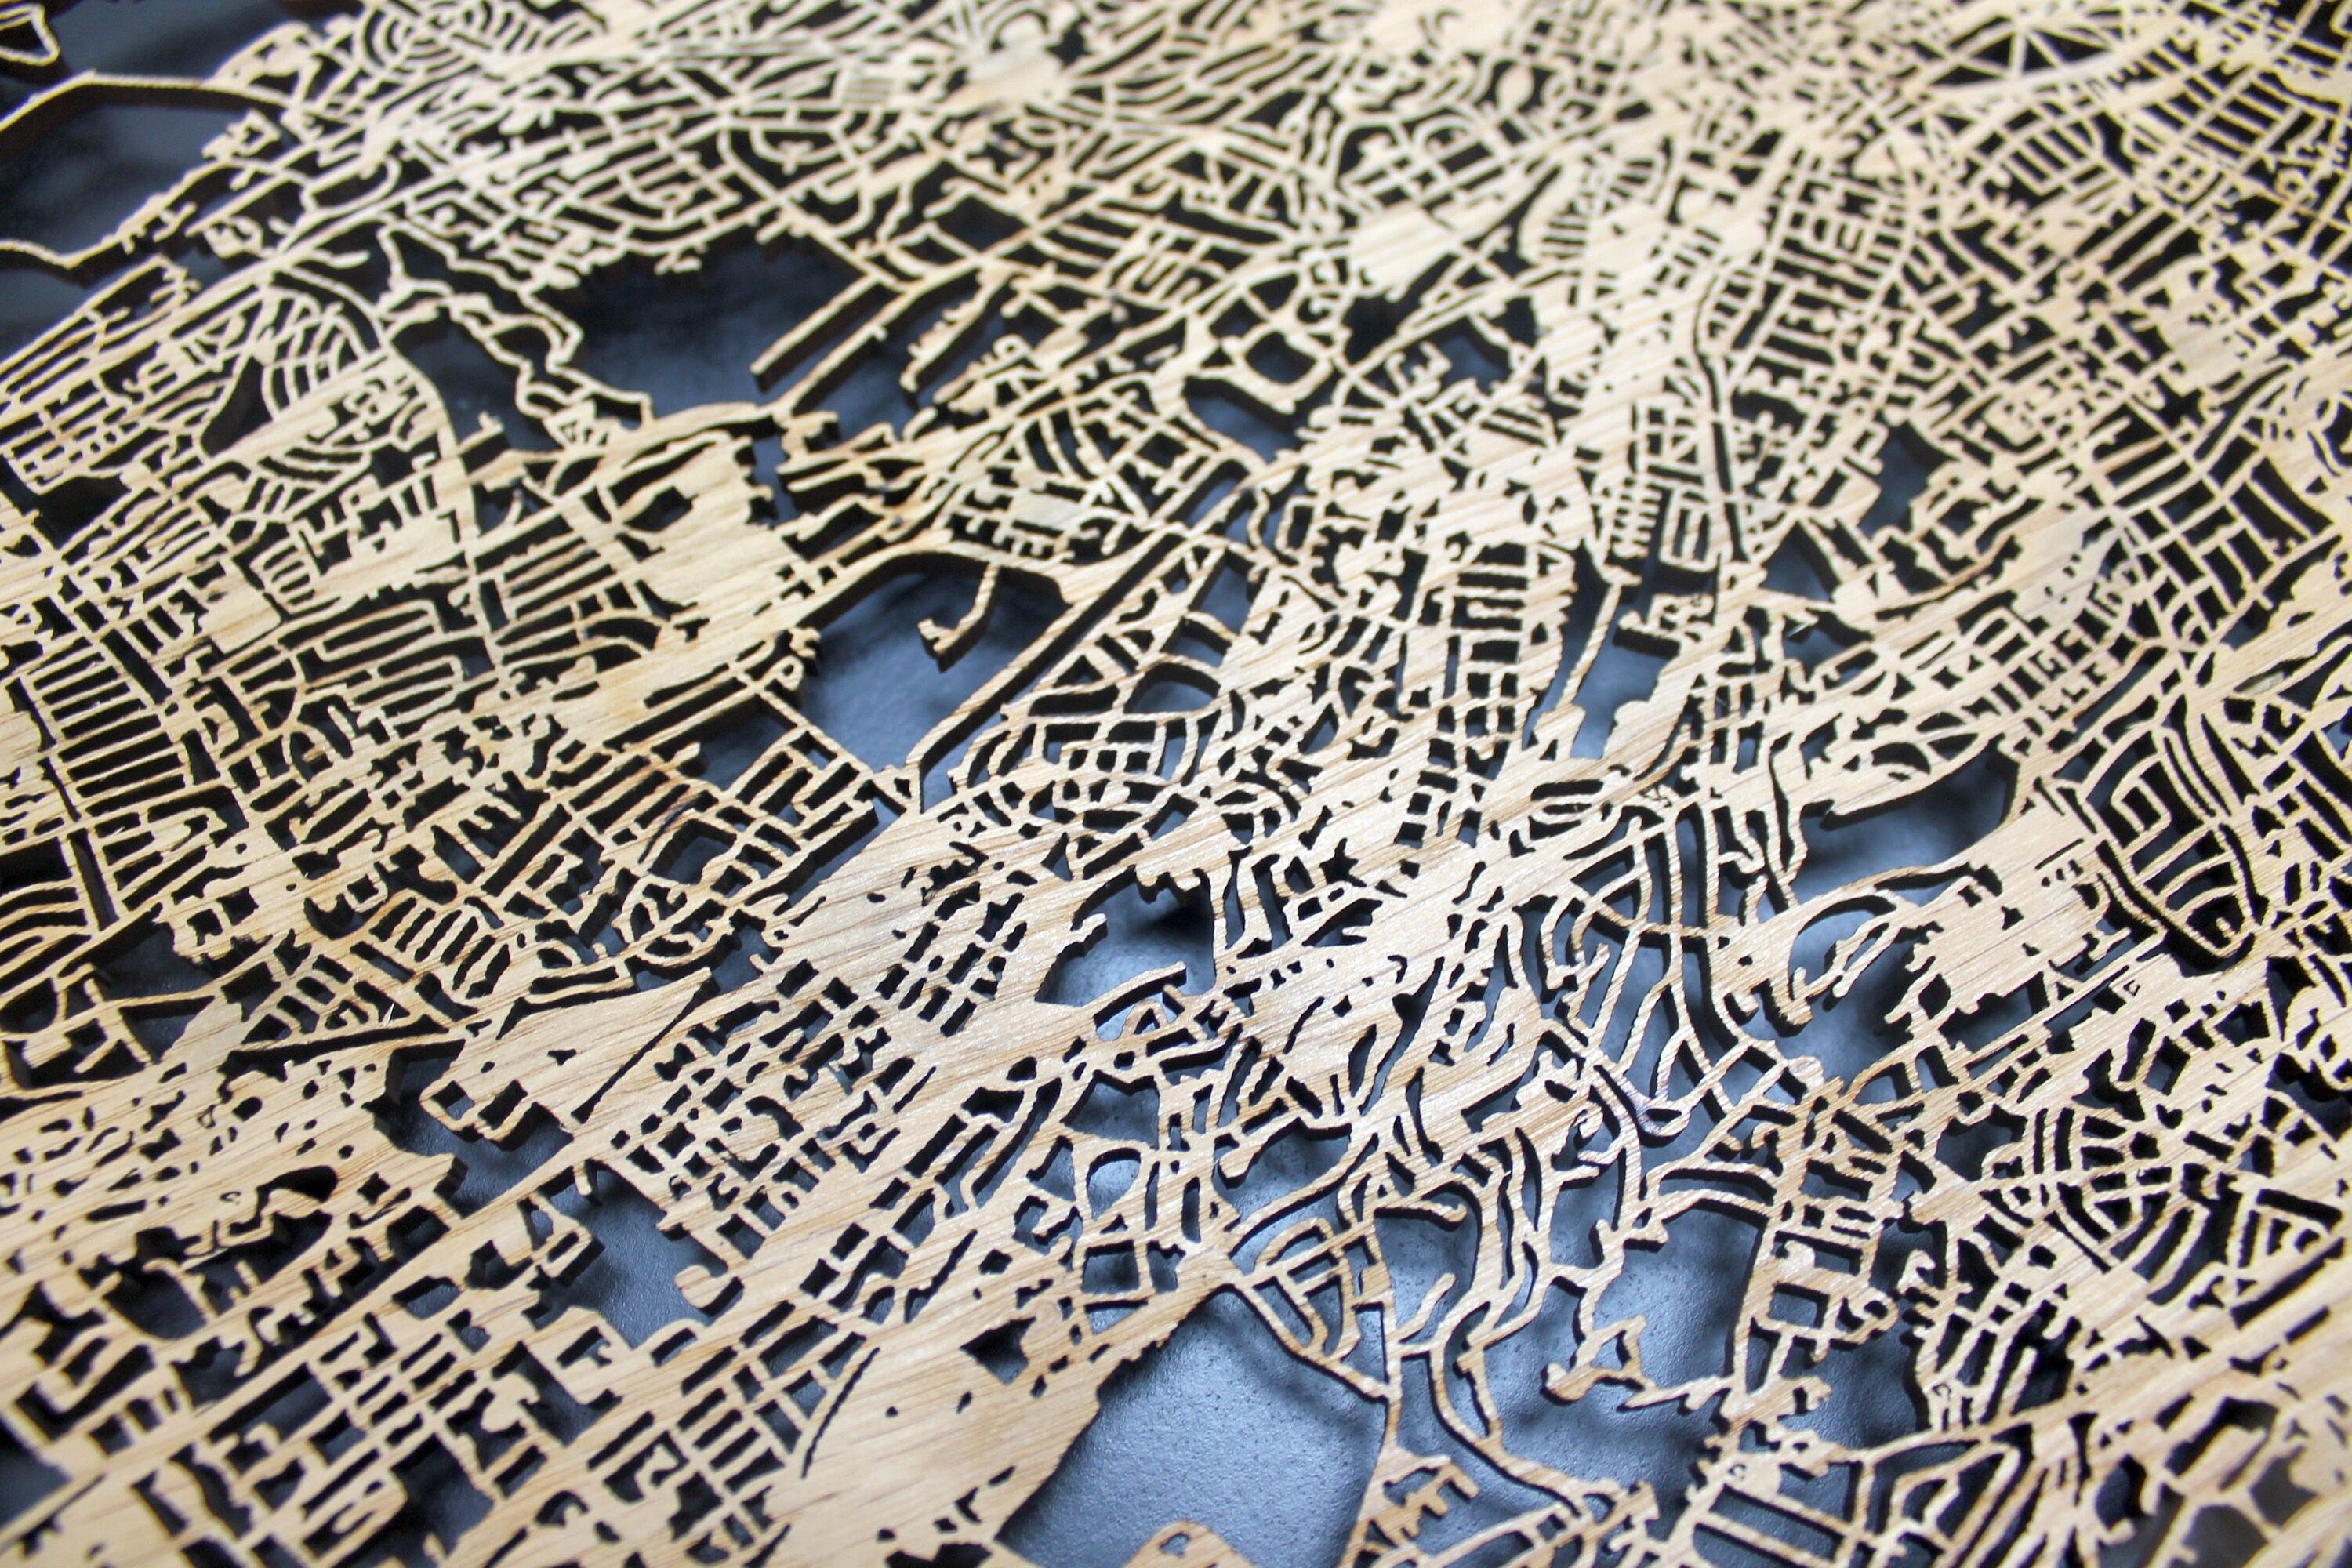 Edinburgh Wood Map Laser Cut Street Maps Wooden Map